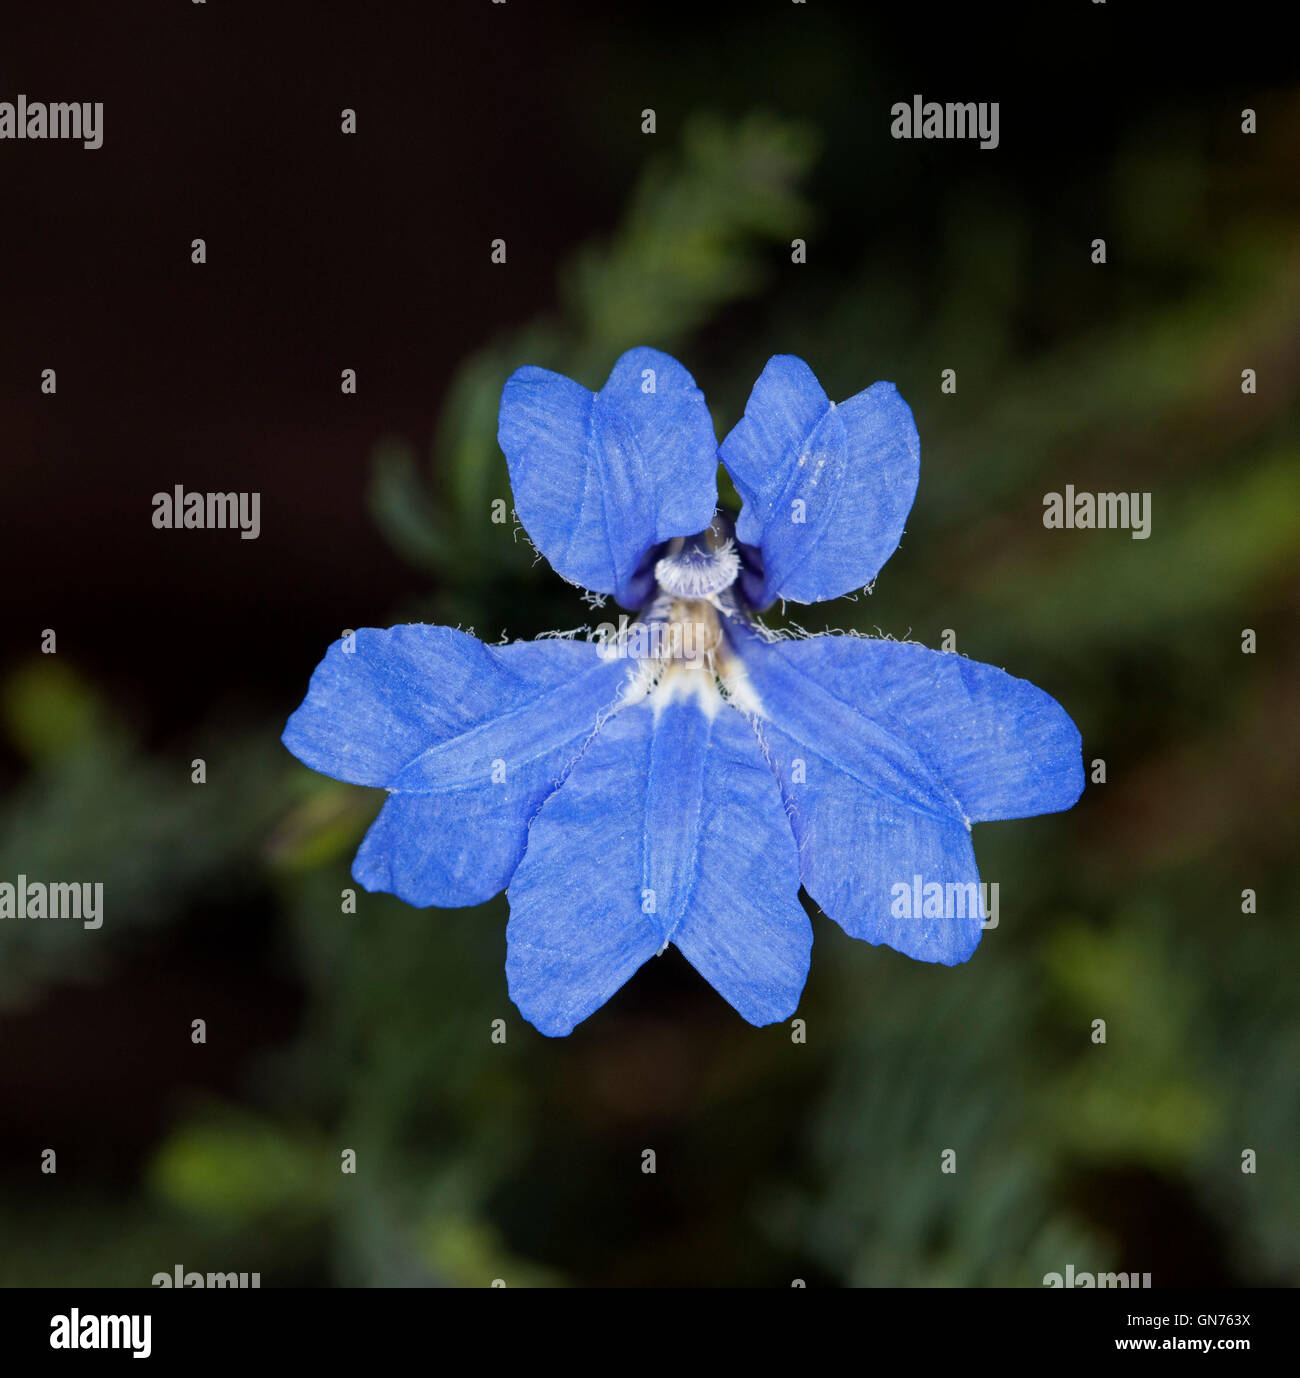 Stunning vivid blue flower with white throat of Lechenaultia biloba, Australian wildflower, against dark green background Stock Photo